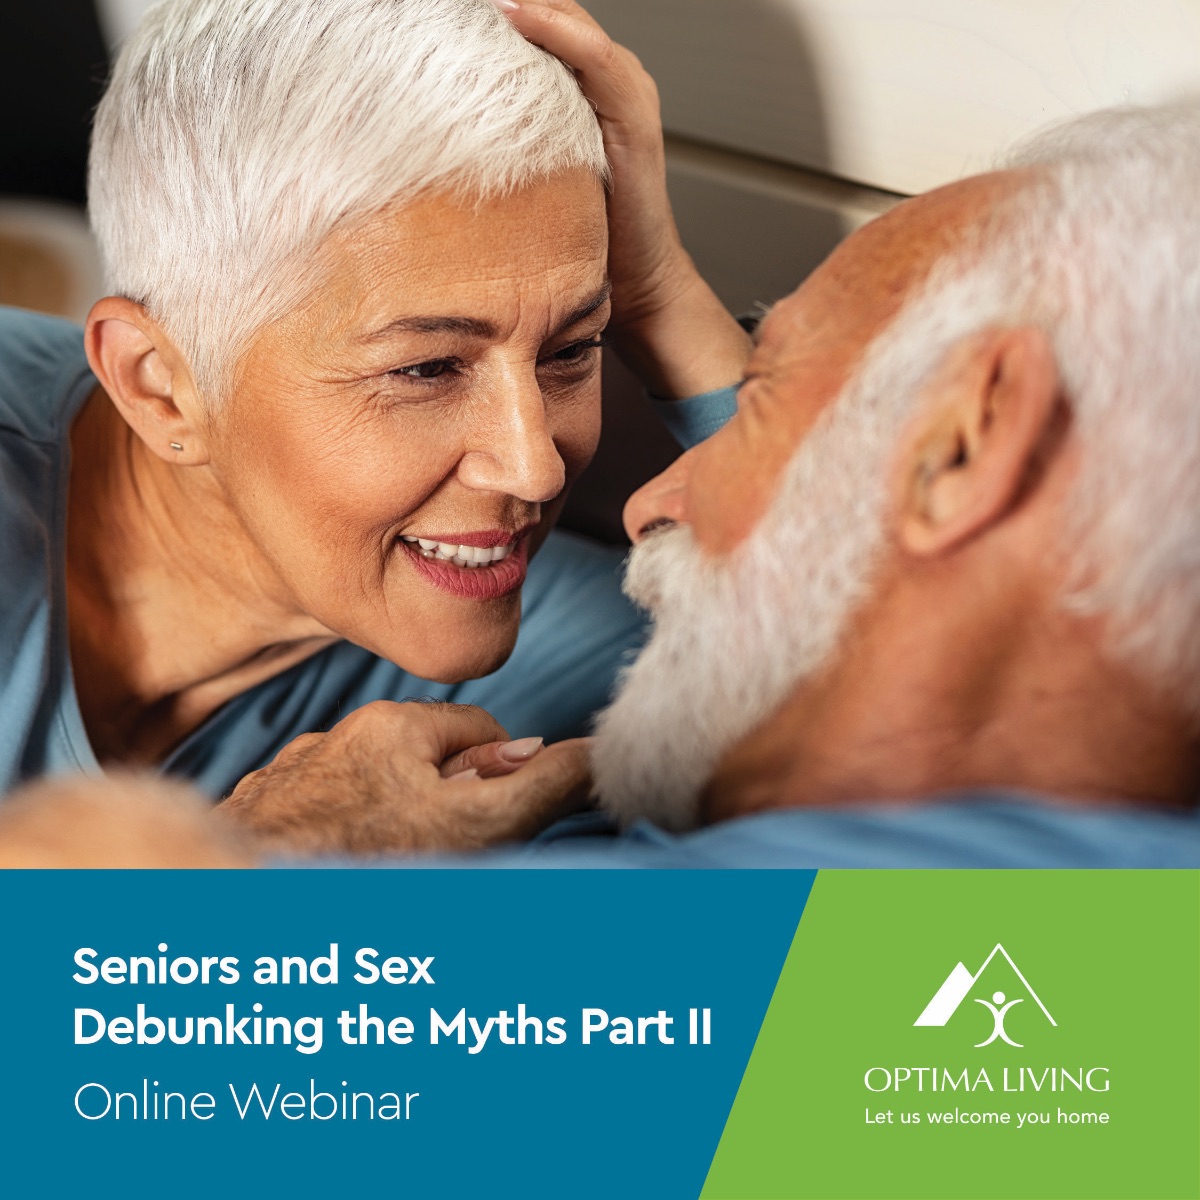 Senior and Sex Webinar by Optima Living senior living